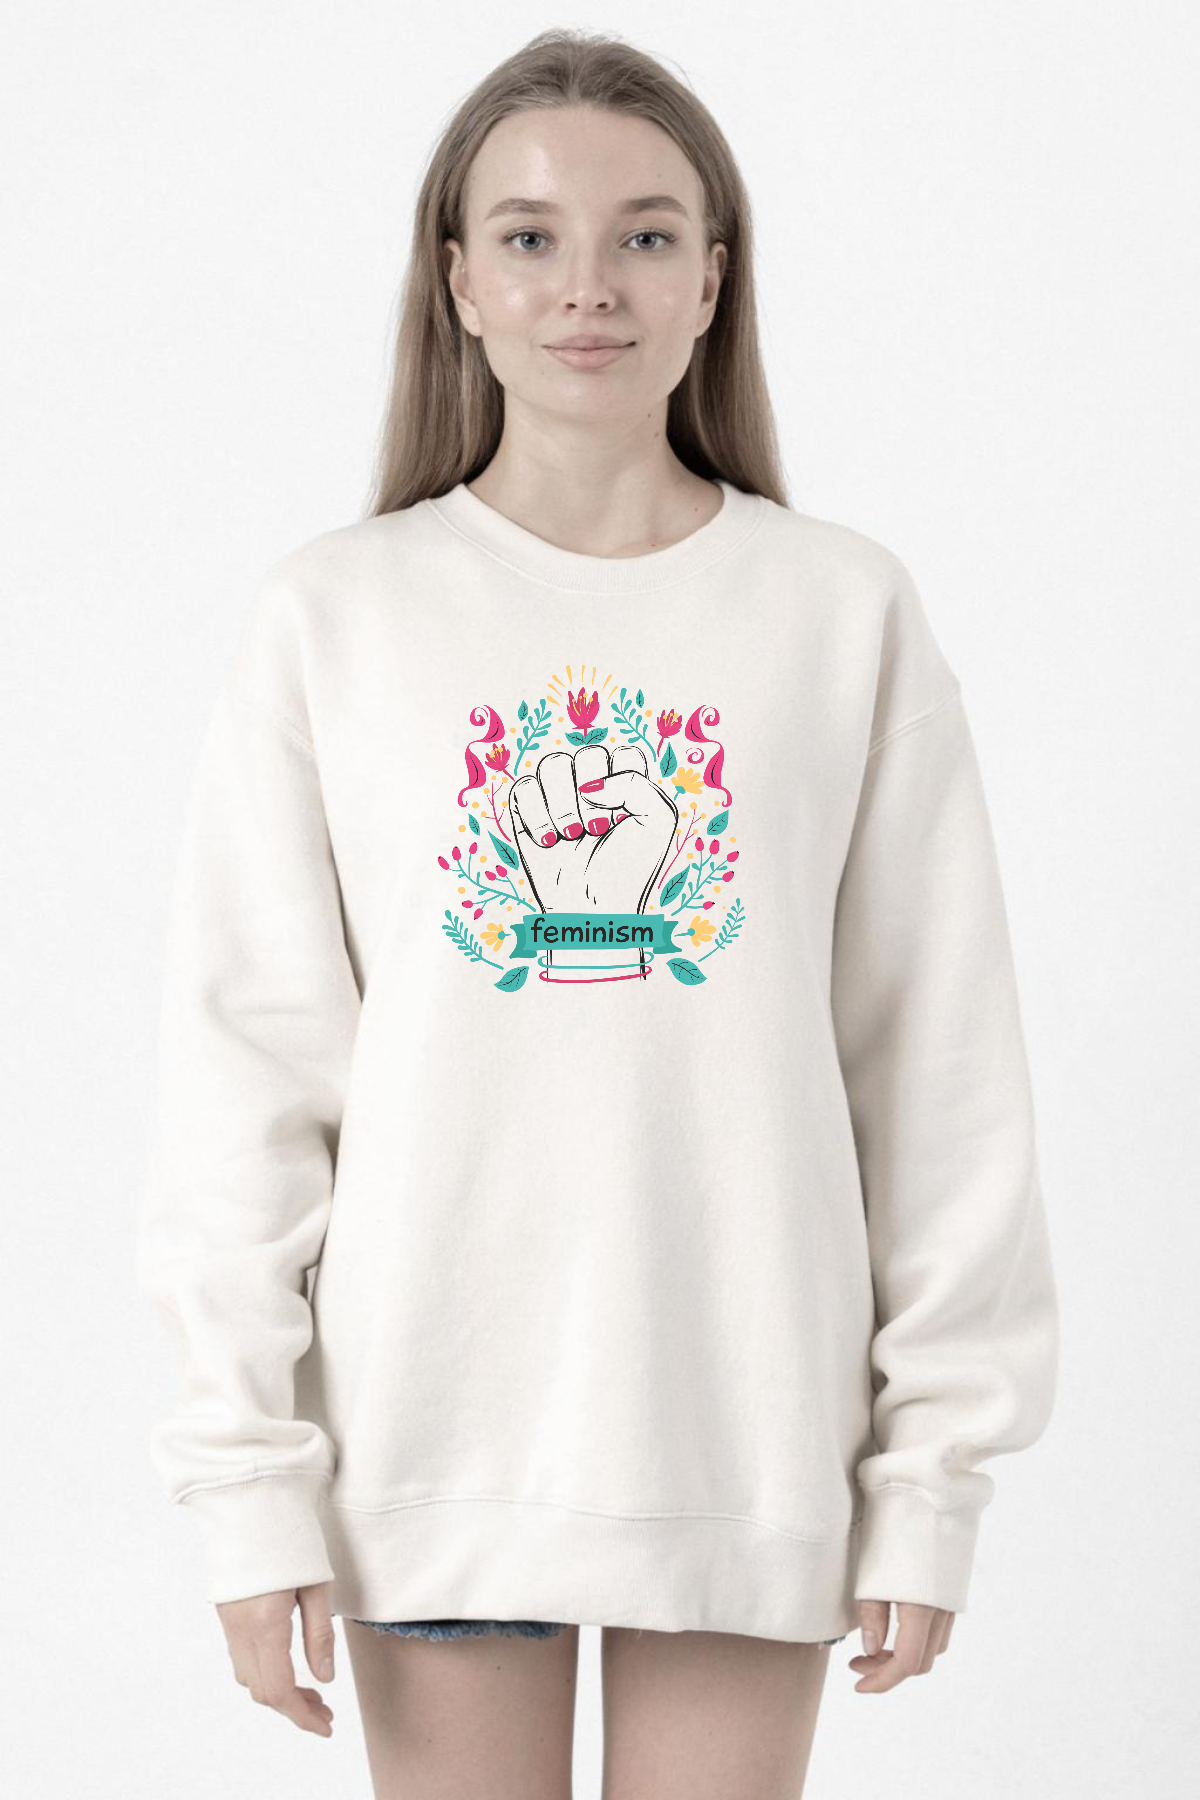 Flowered Feminism Hand Beyaz Kadın 2ip Sweatshirt